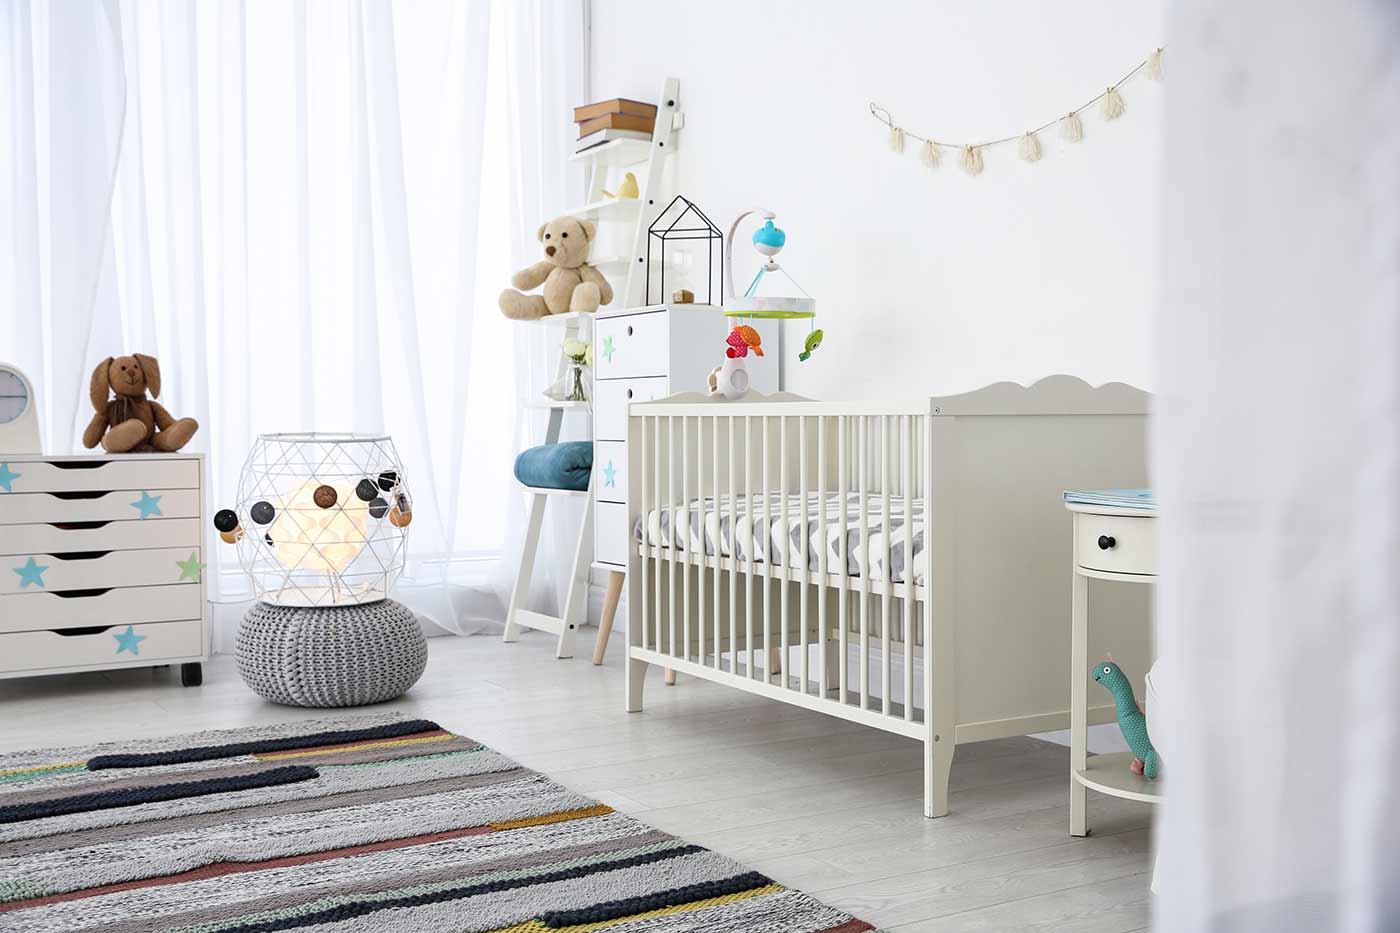 Nursery room with crib